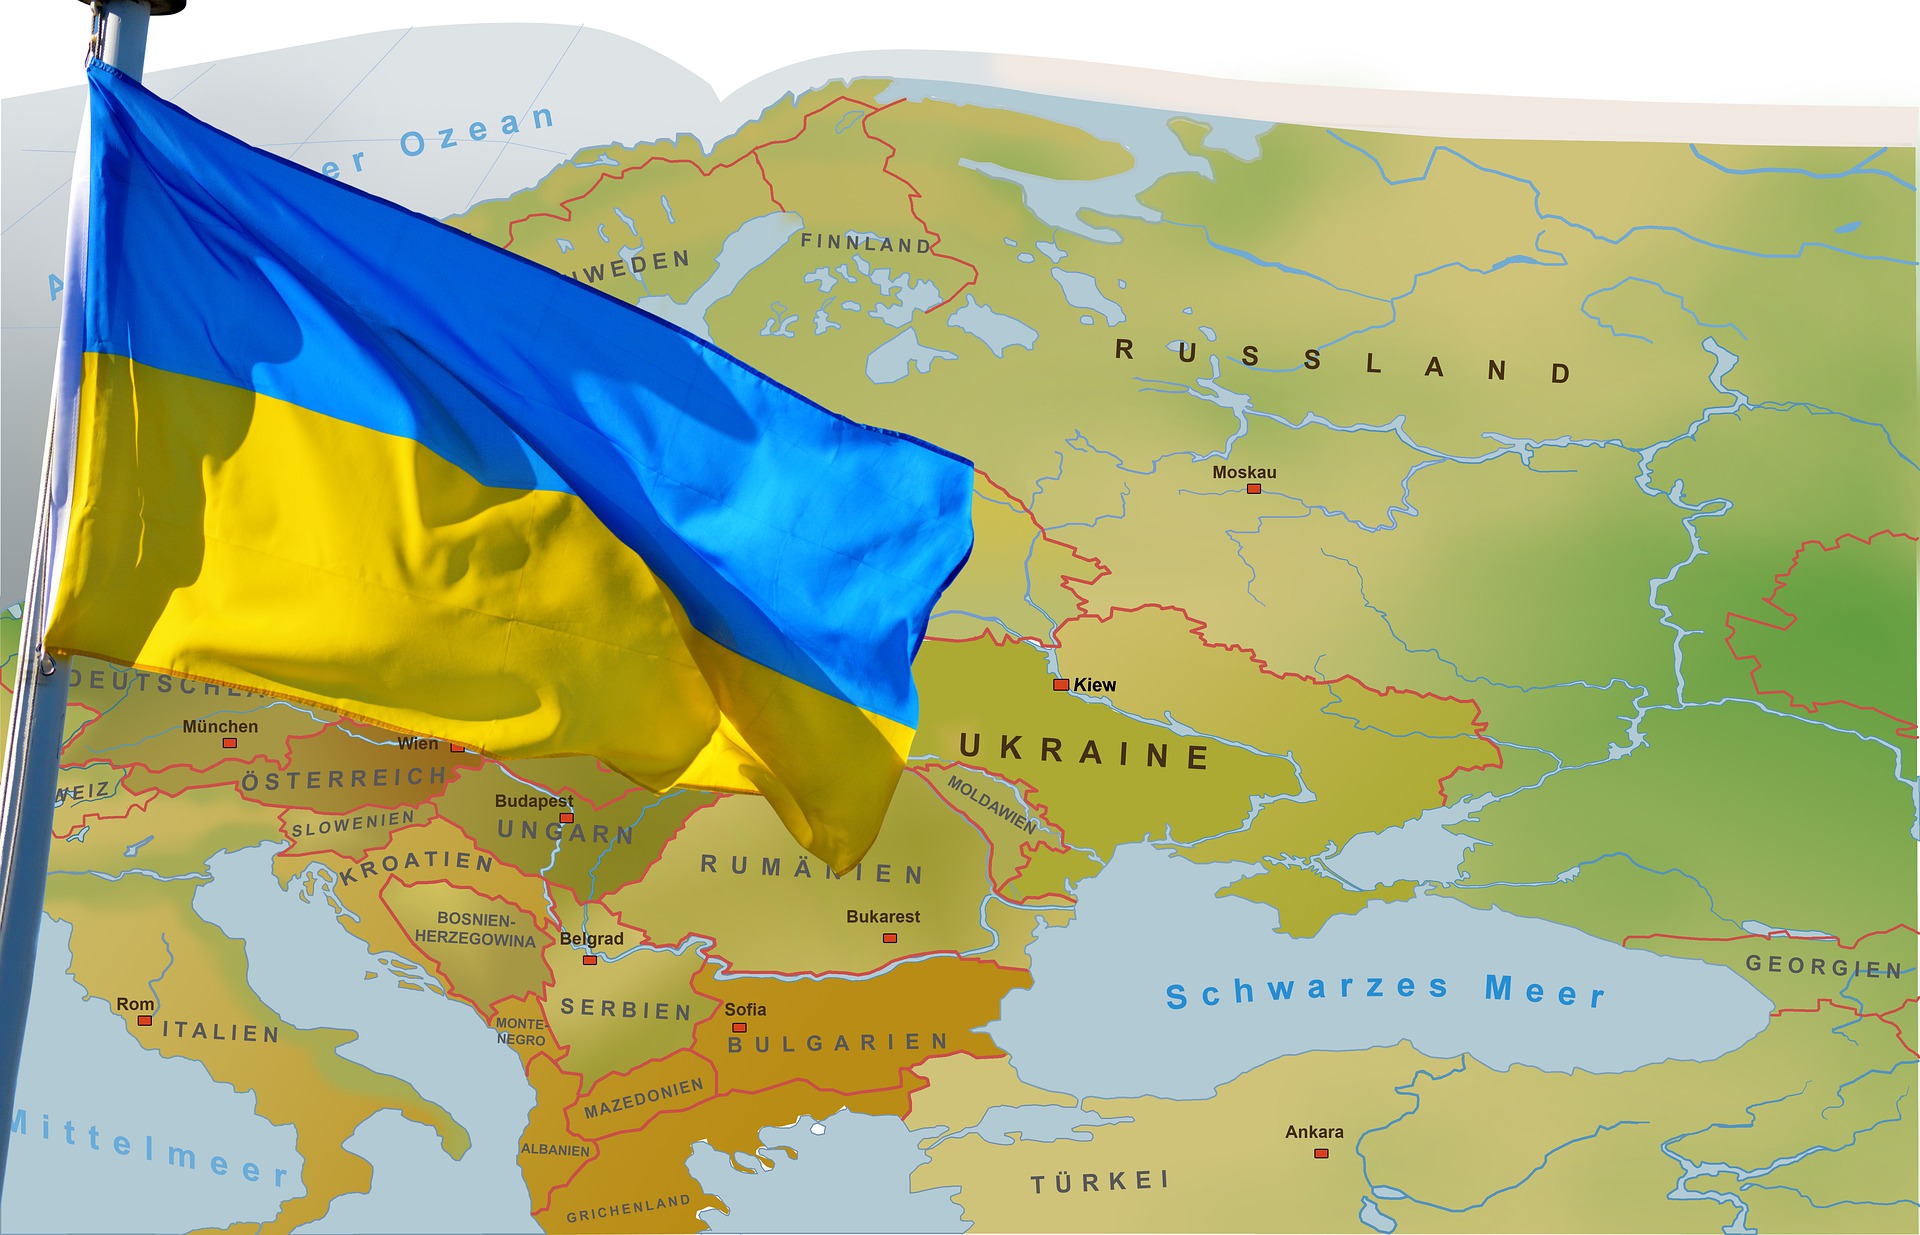 Ukraine flag over the map of world.